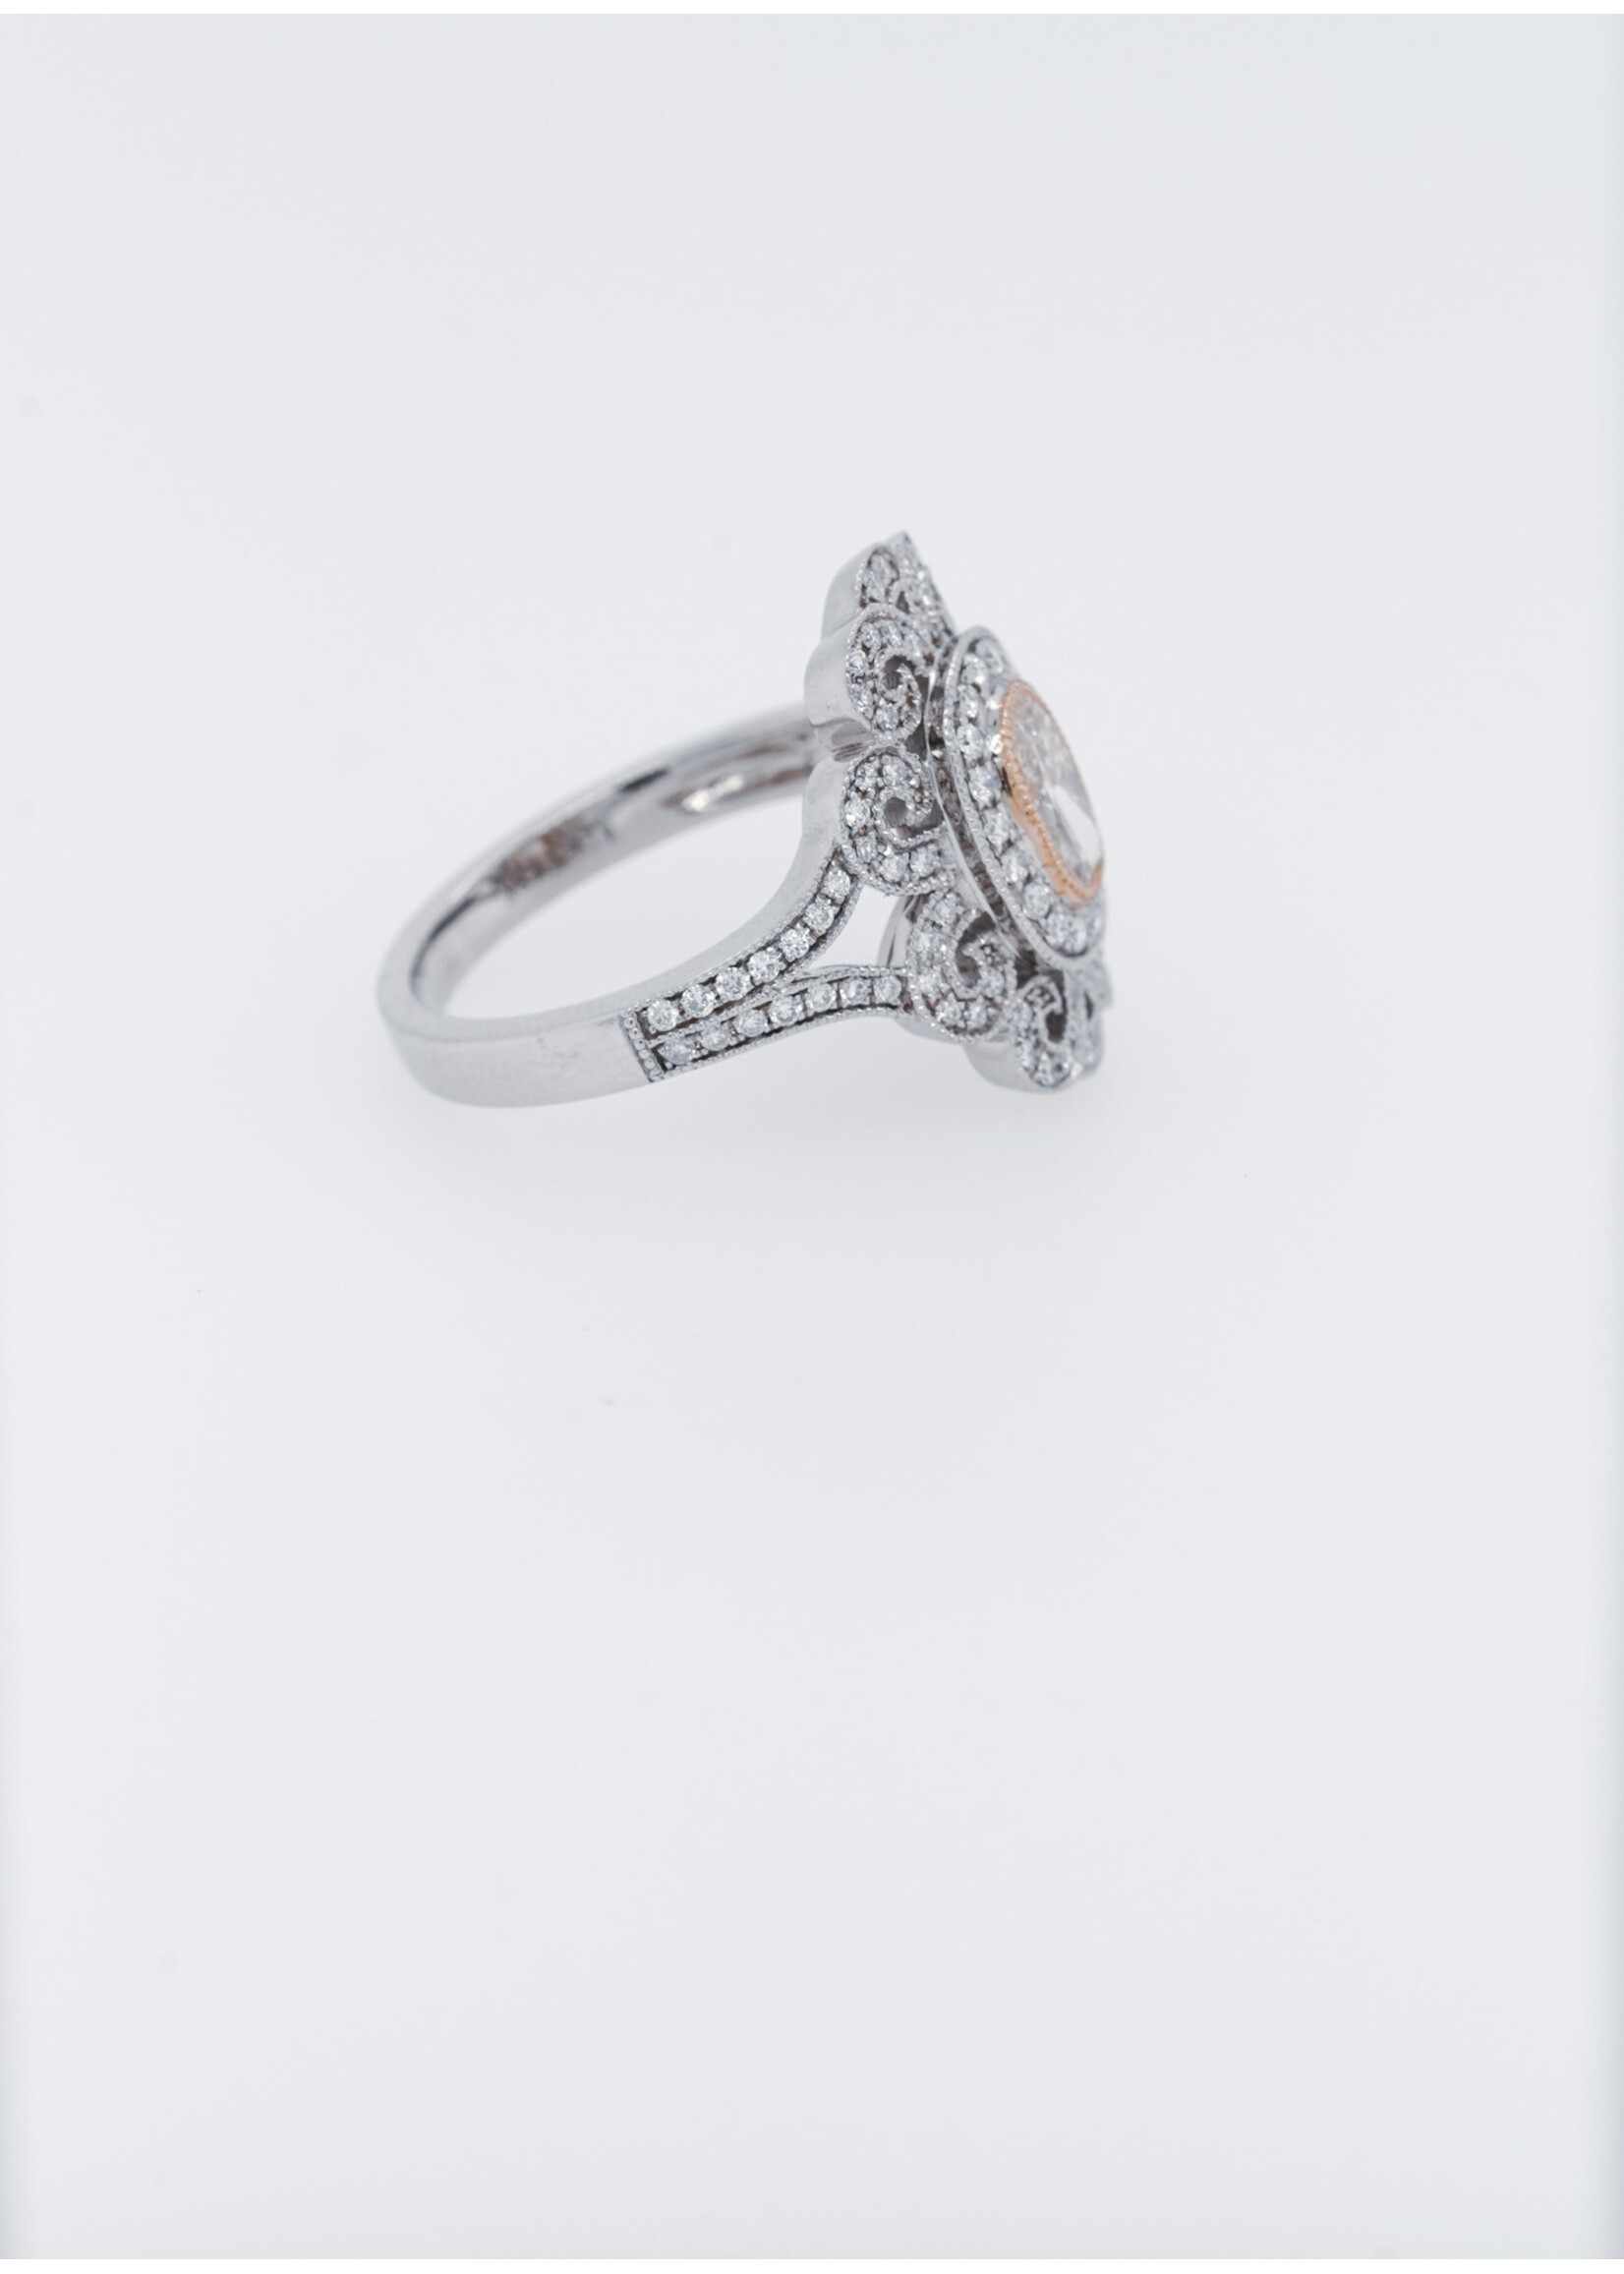 14KW 5.1g 0.91ctw (0.54ctr) K/SI1 Cushion Diamond Halo Fashion Ring (size 6.5)